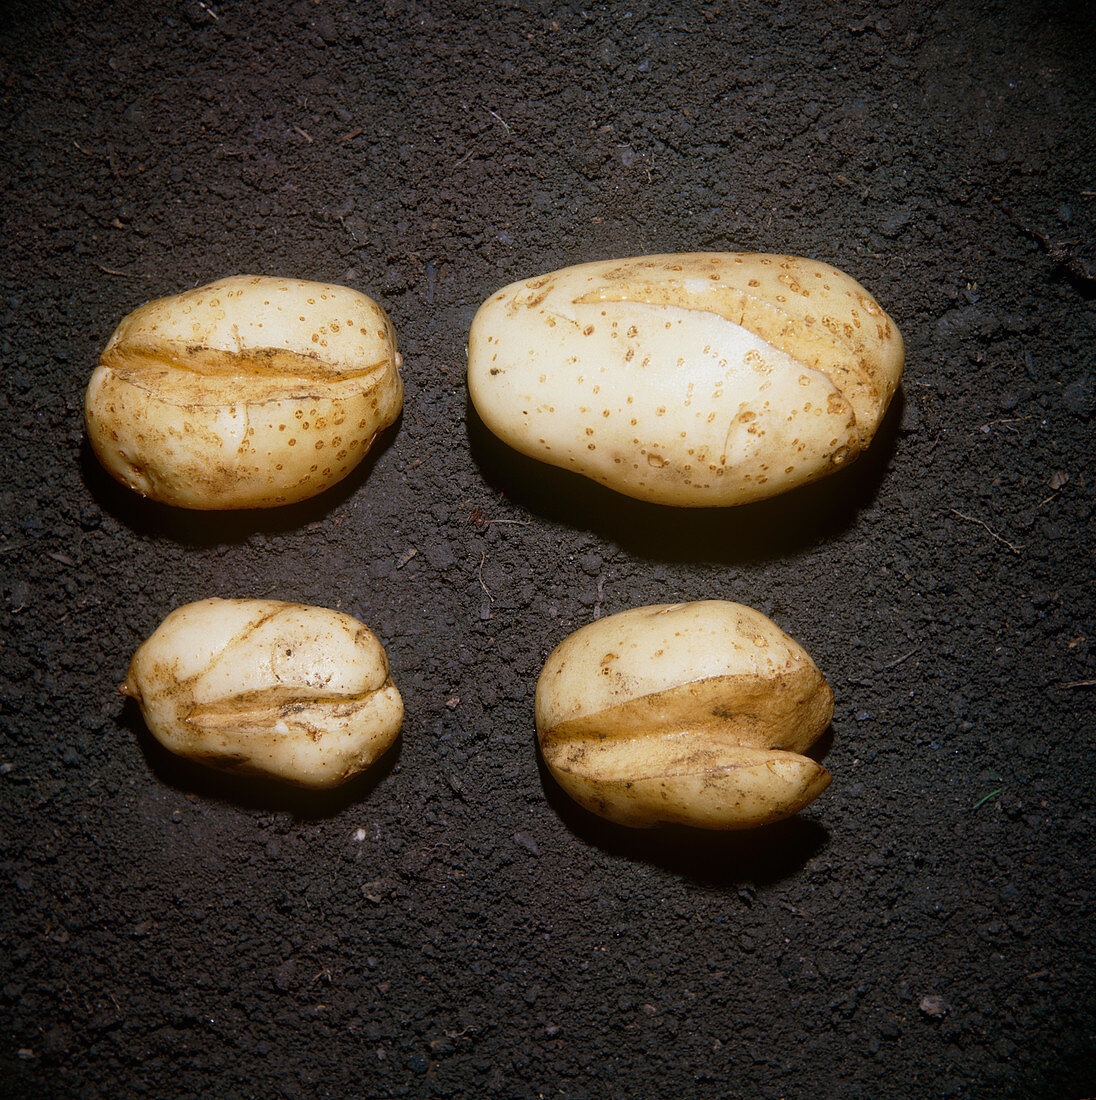 Splitting of potato tubers